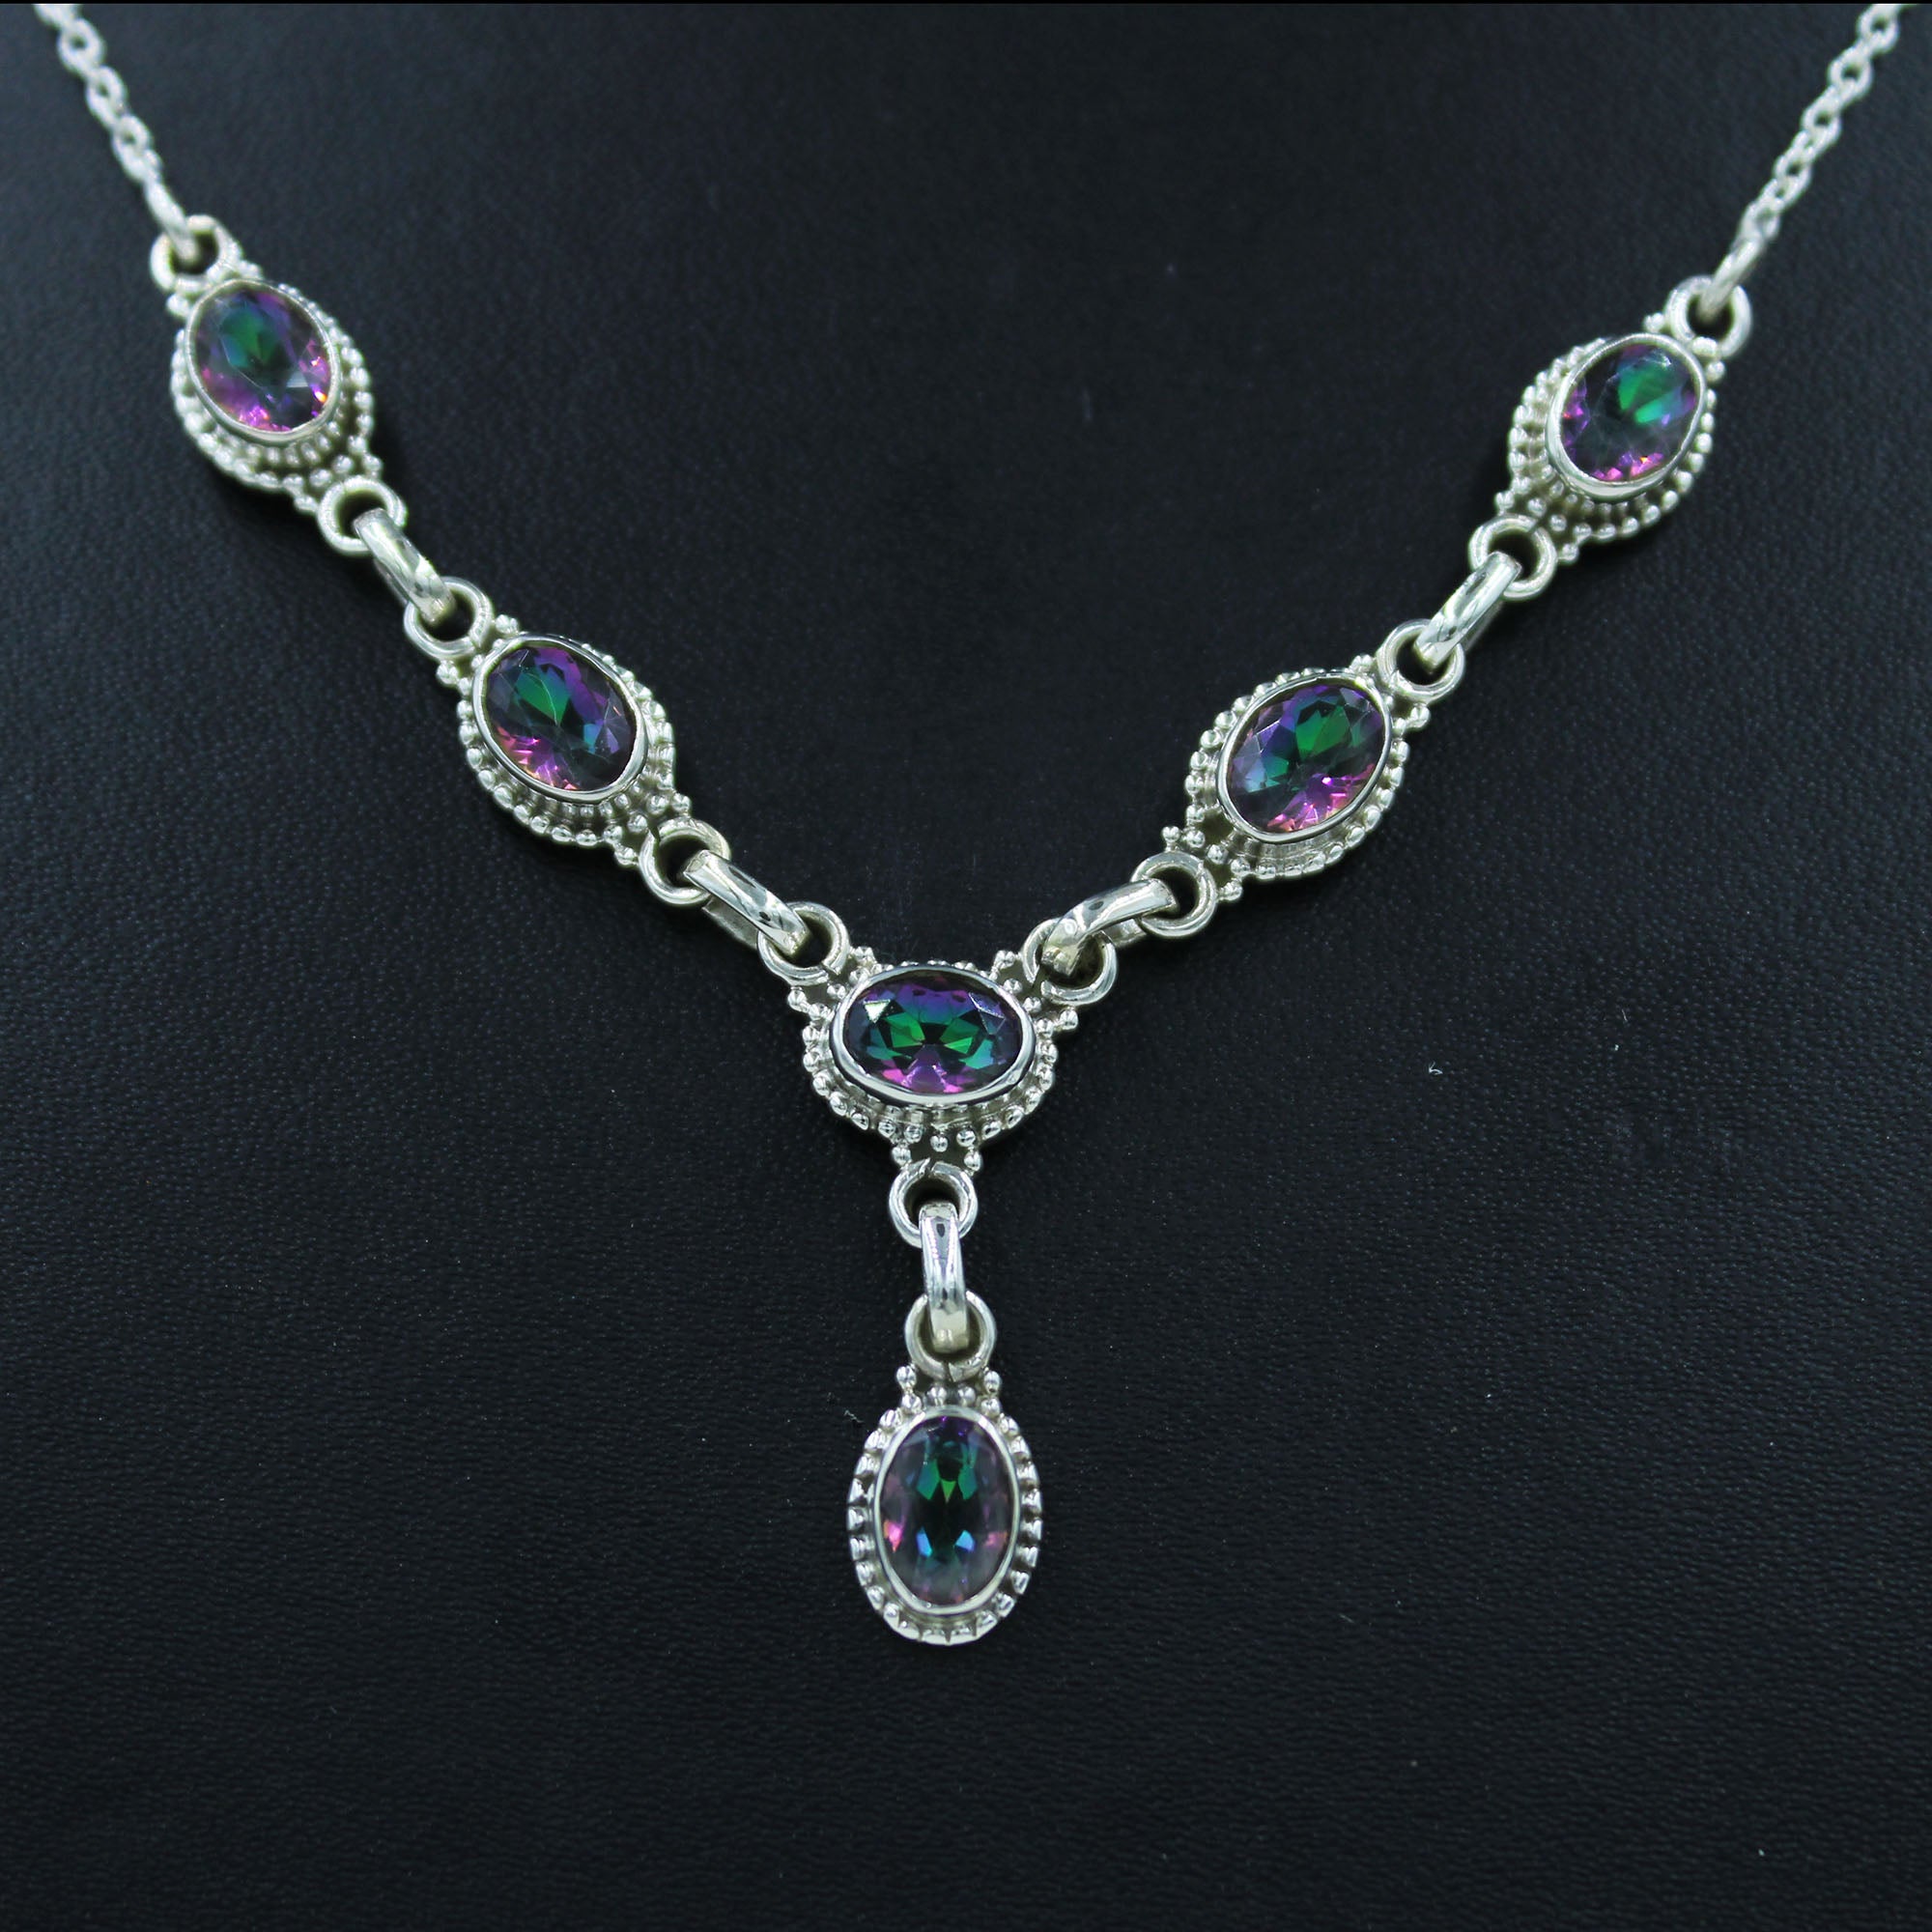 Dazzling Mystic Quartz Necklace at Wholesale Price